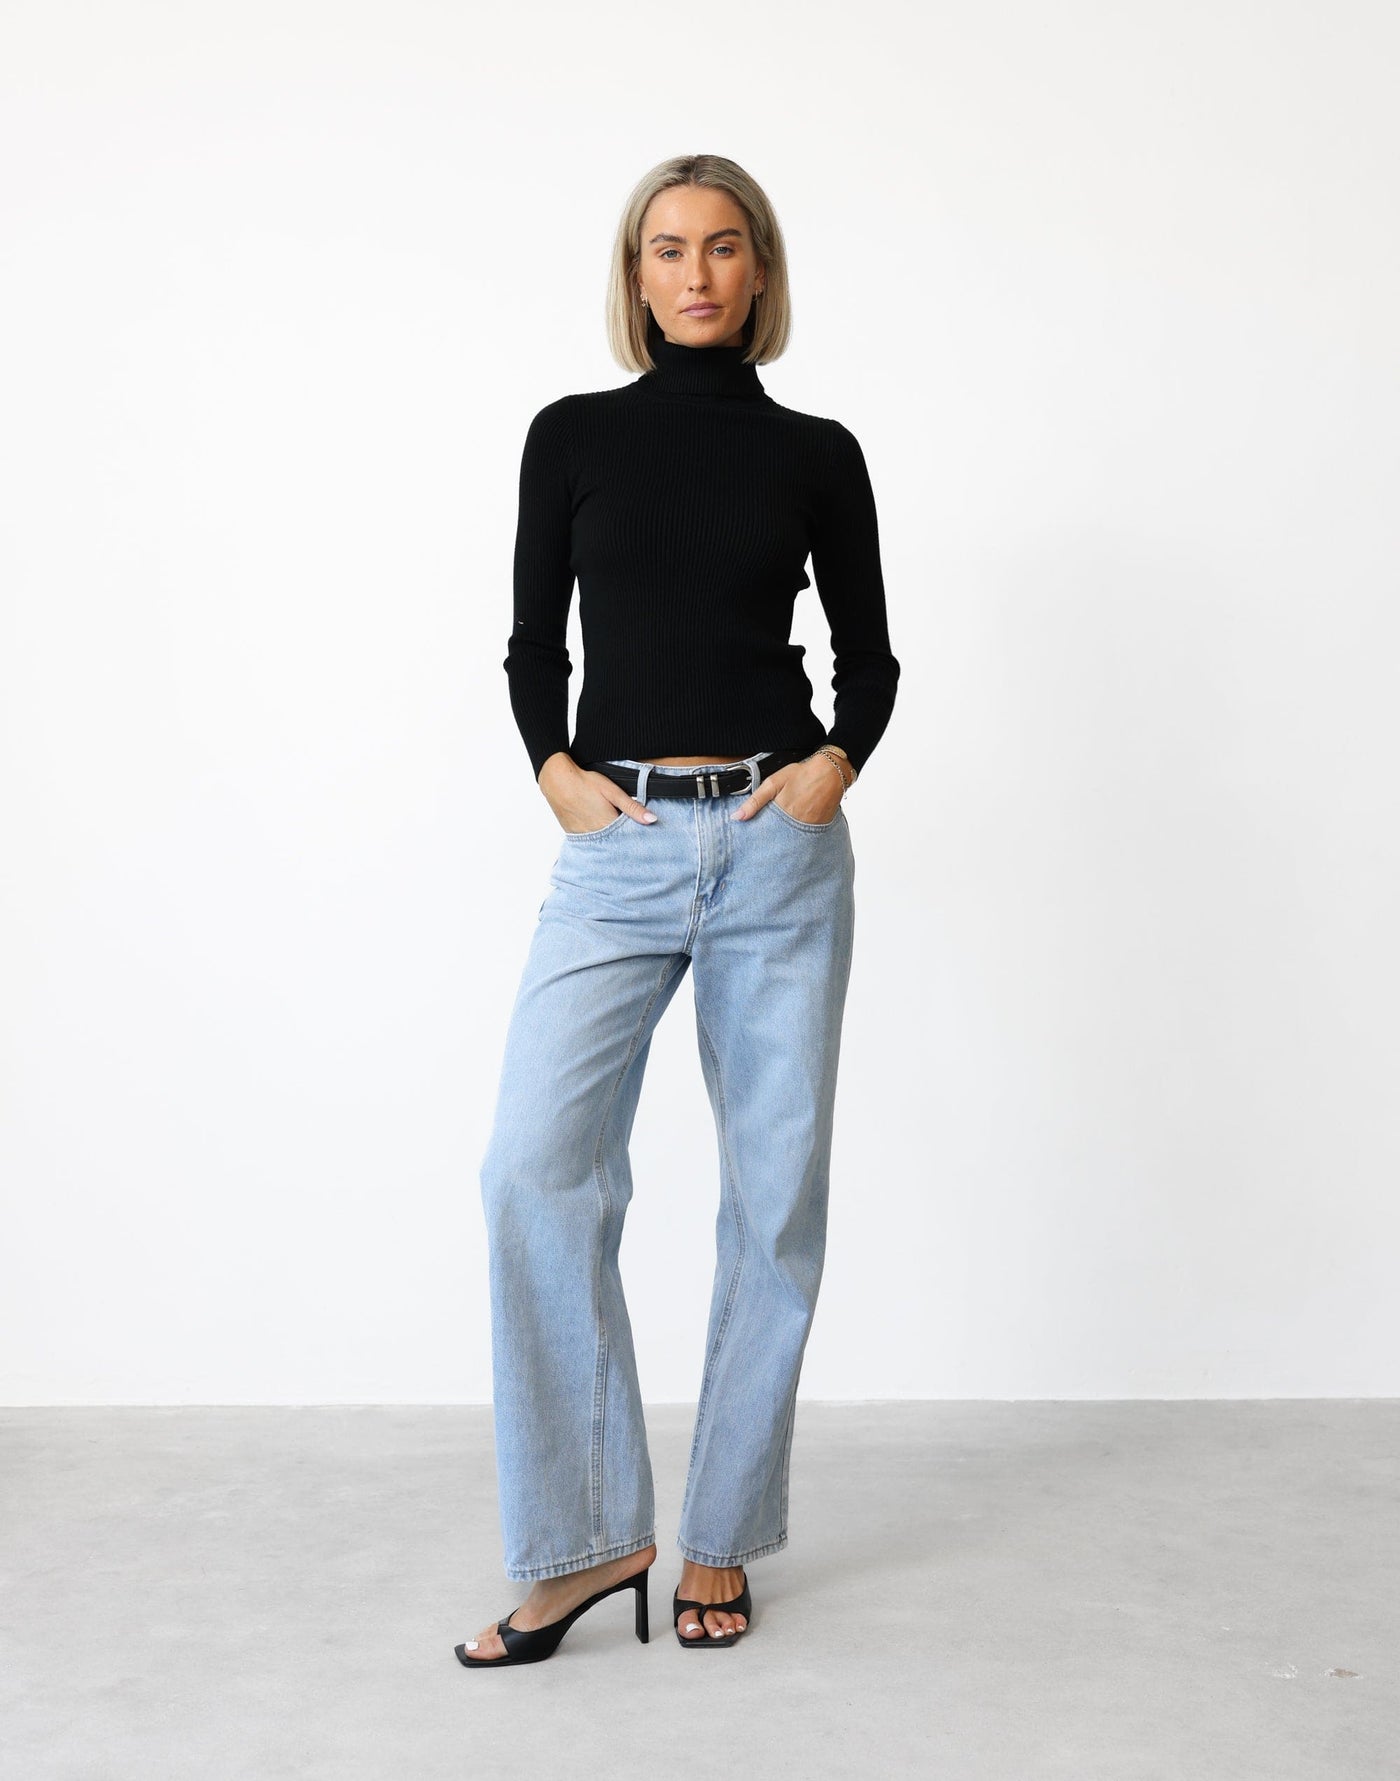 Davison Long Sleeve Knit Top (Black) - Turtleneck Long Sleeve Knit Top - Women's Top - Charcoal Clothing